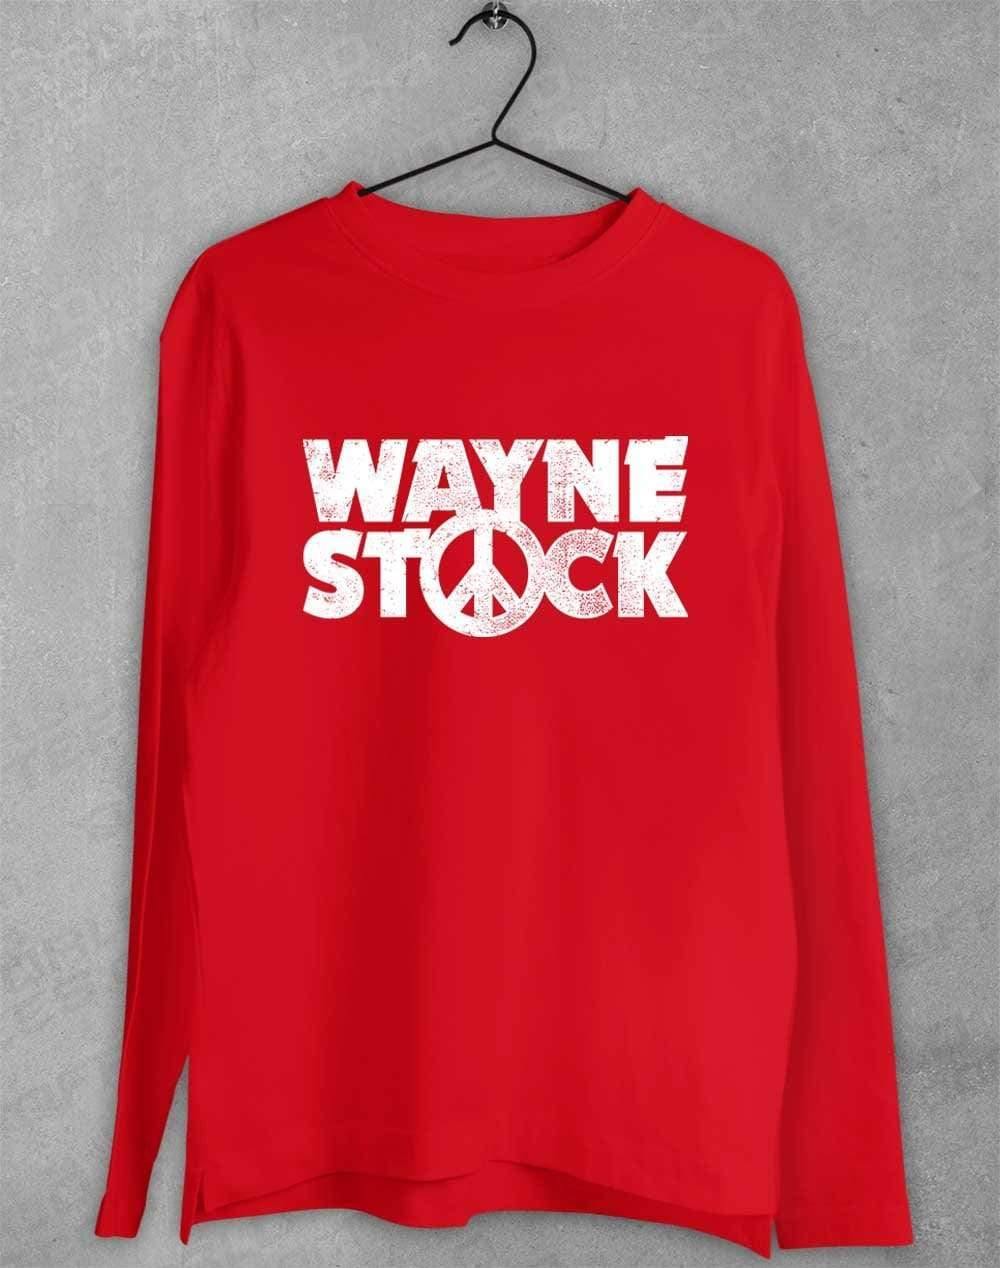 Waynestock Long Sleeve T-Shirt S / Red  - Off World Tees